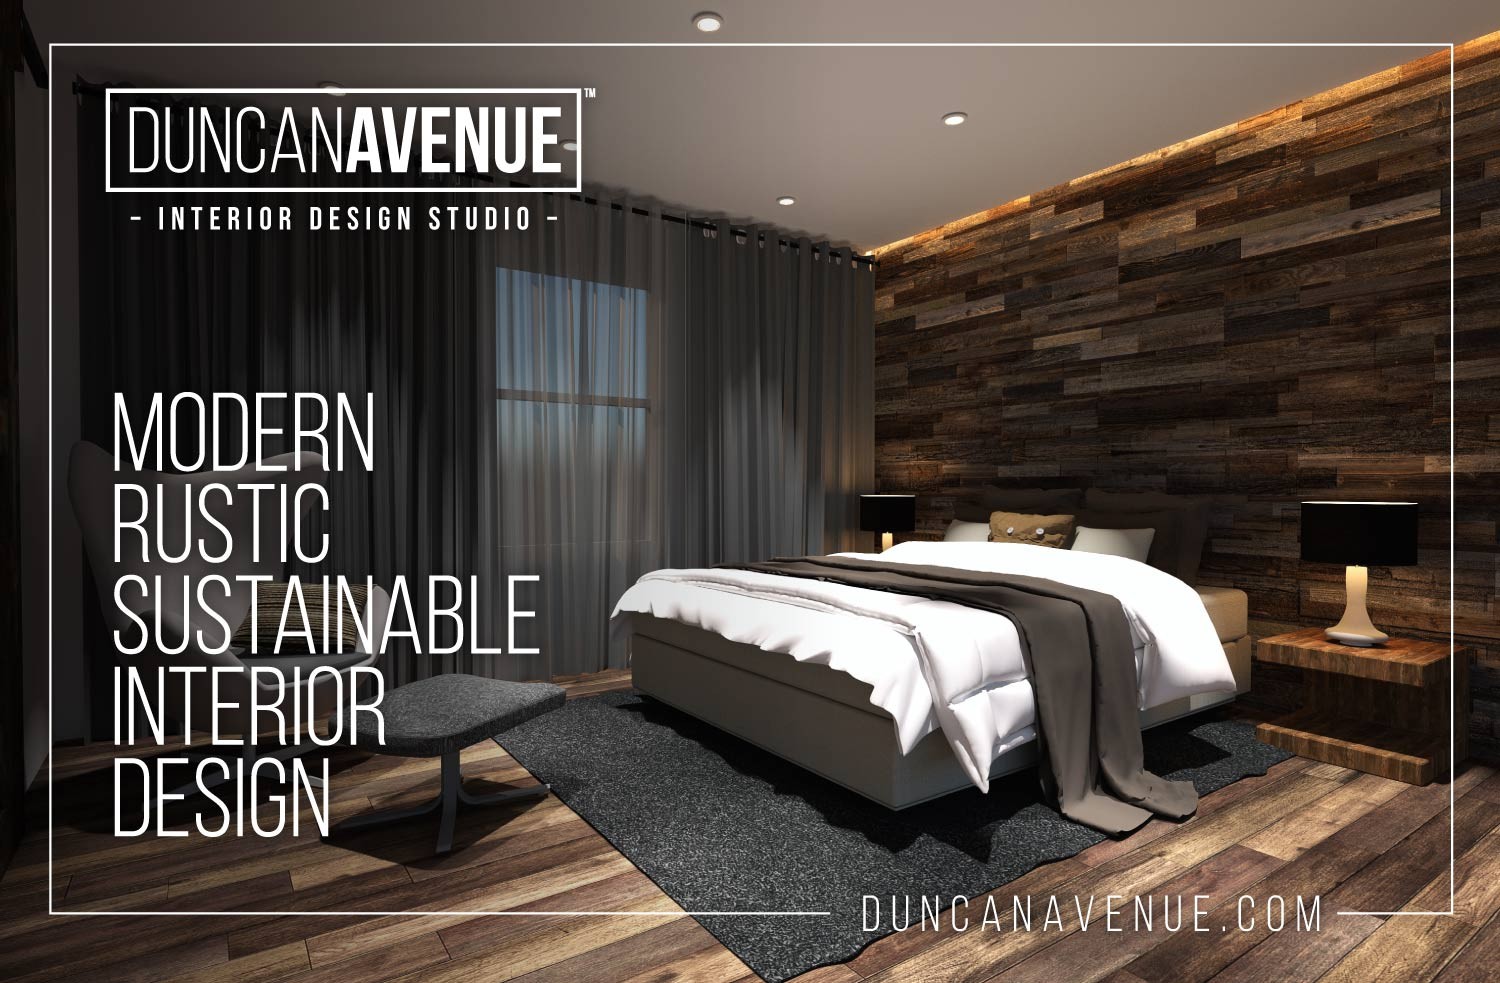 Duncan Avenue Interior Design Studio - Hudson Valley